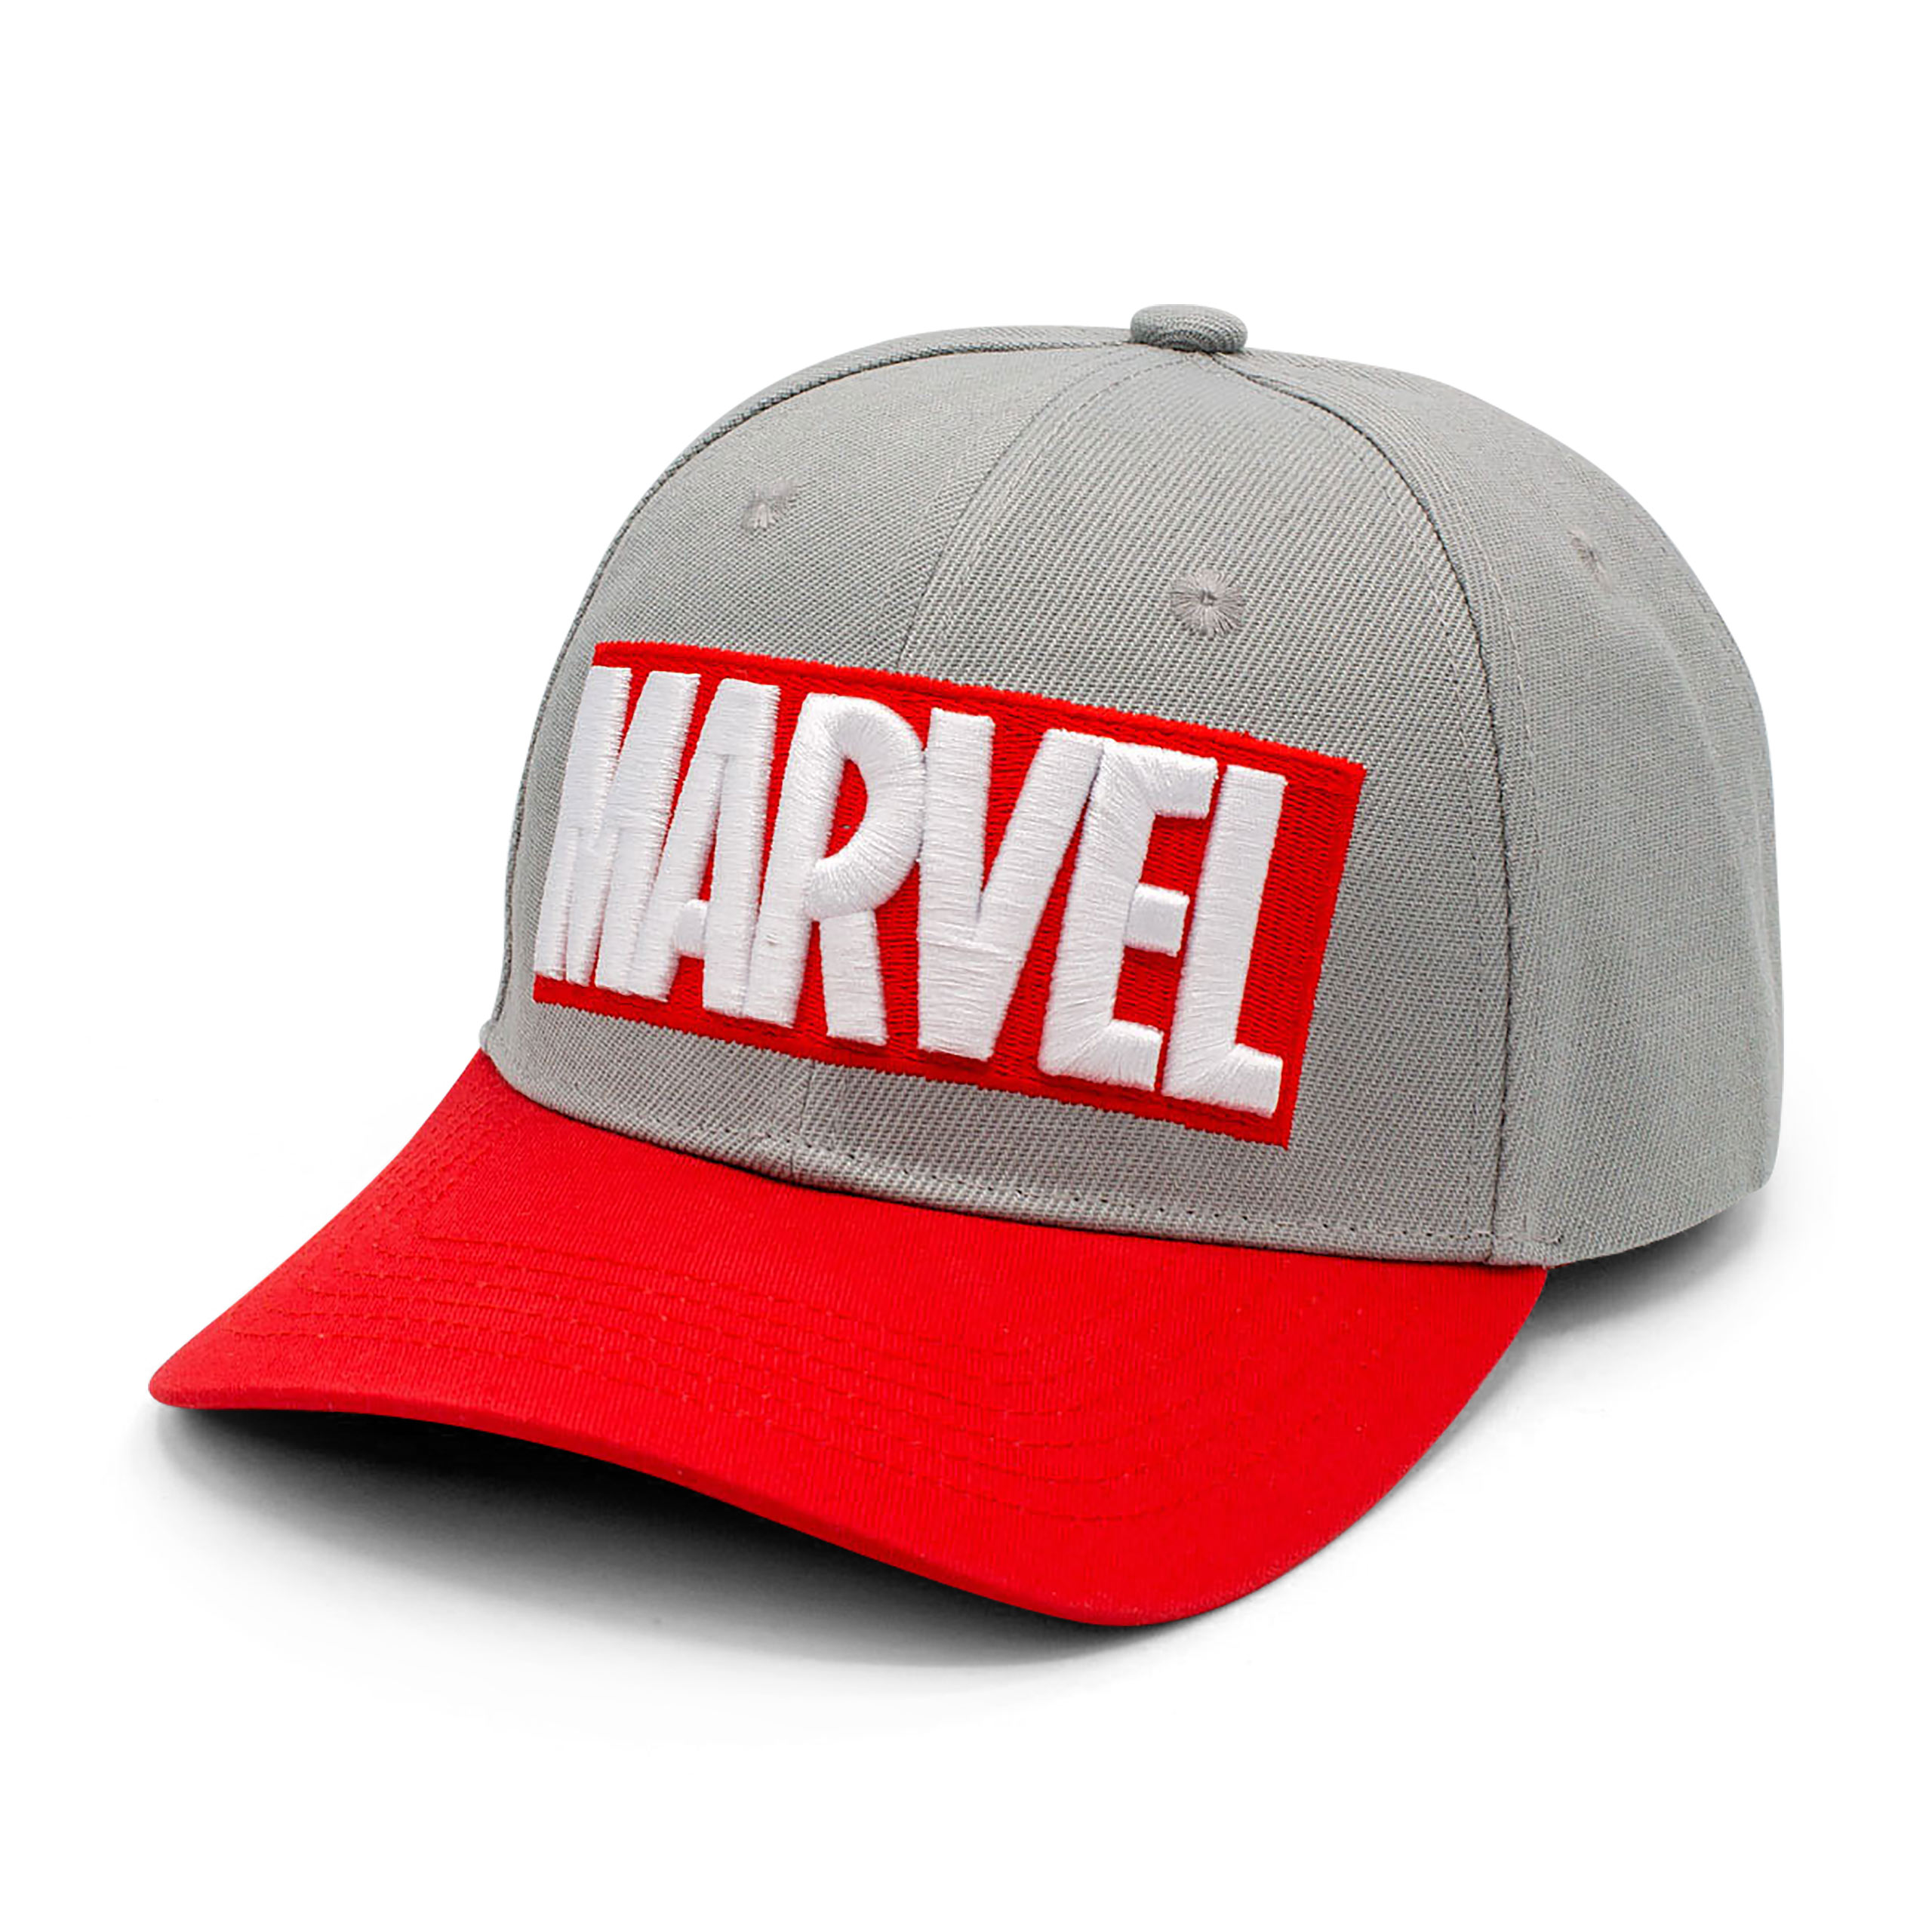 Marvel - Logo Basecap grau-rot